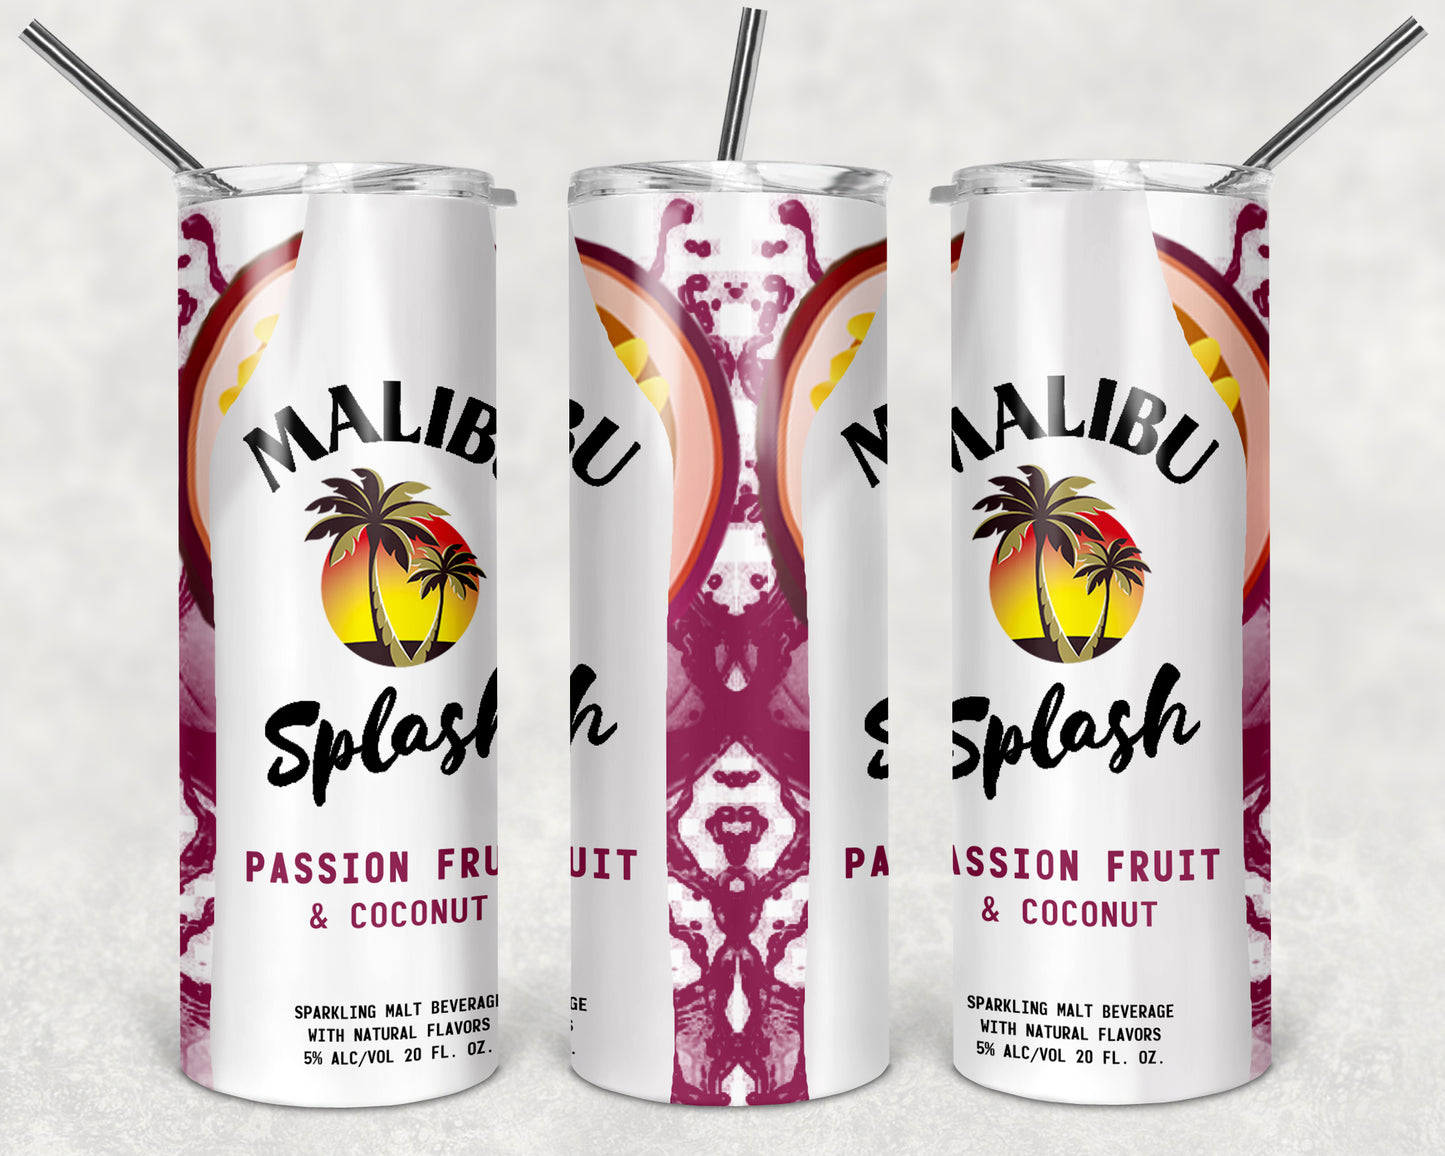 MALIBU SPLASH PASSION FRUIT